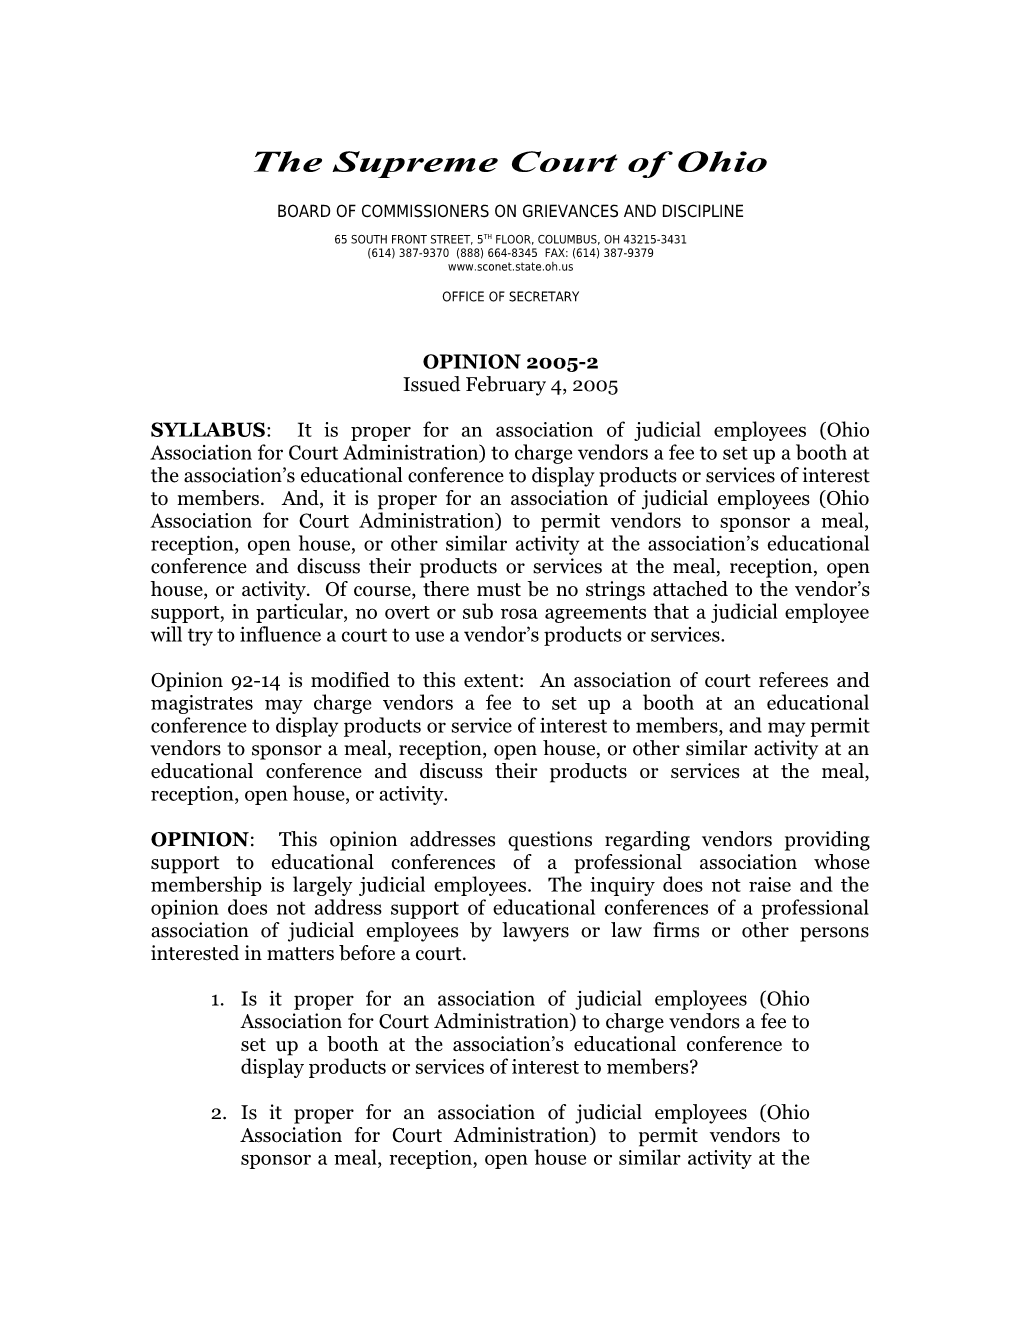 The Supreme Court of Ohio s1